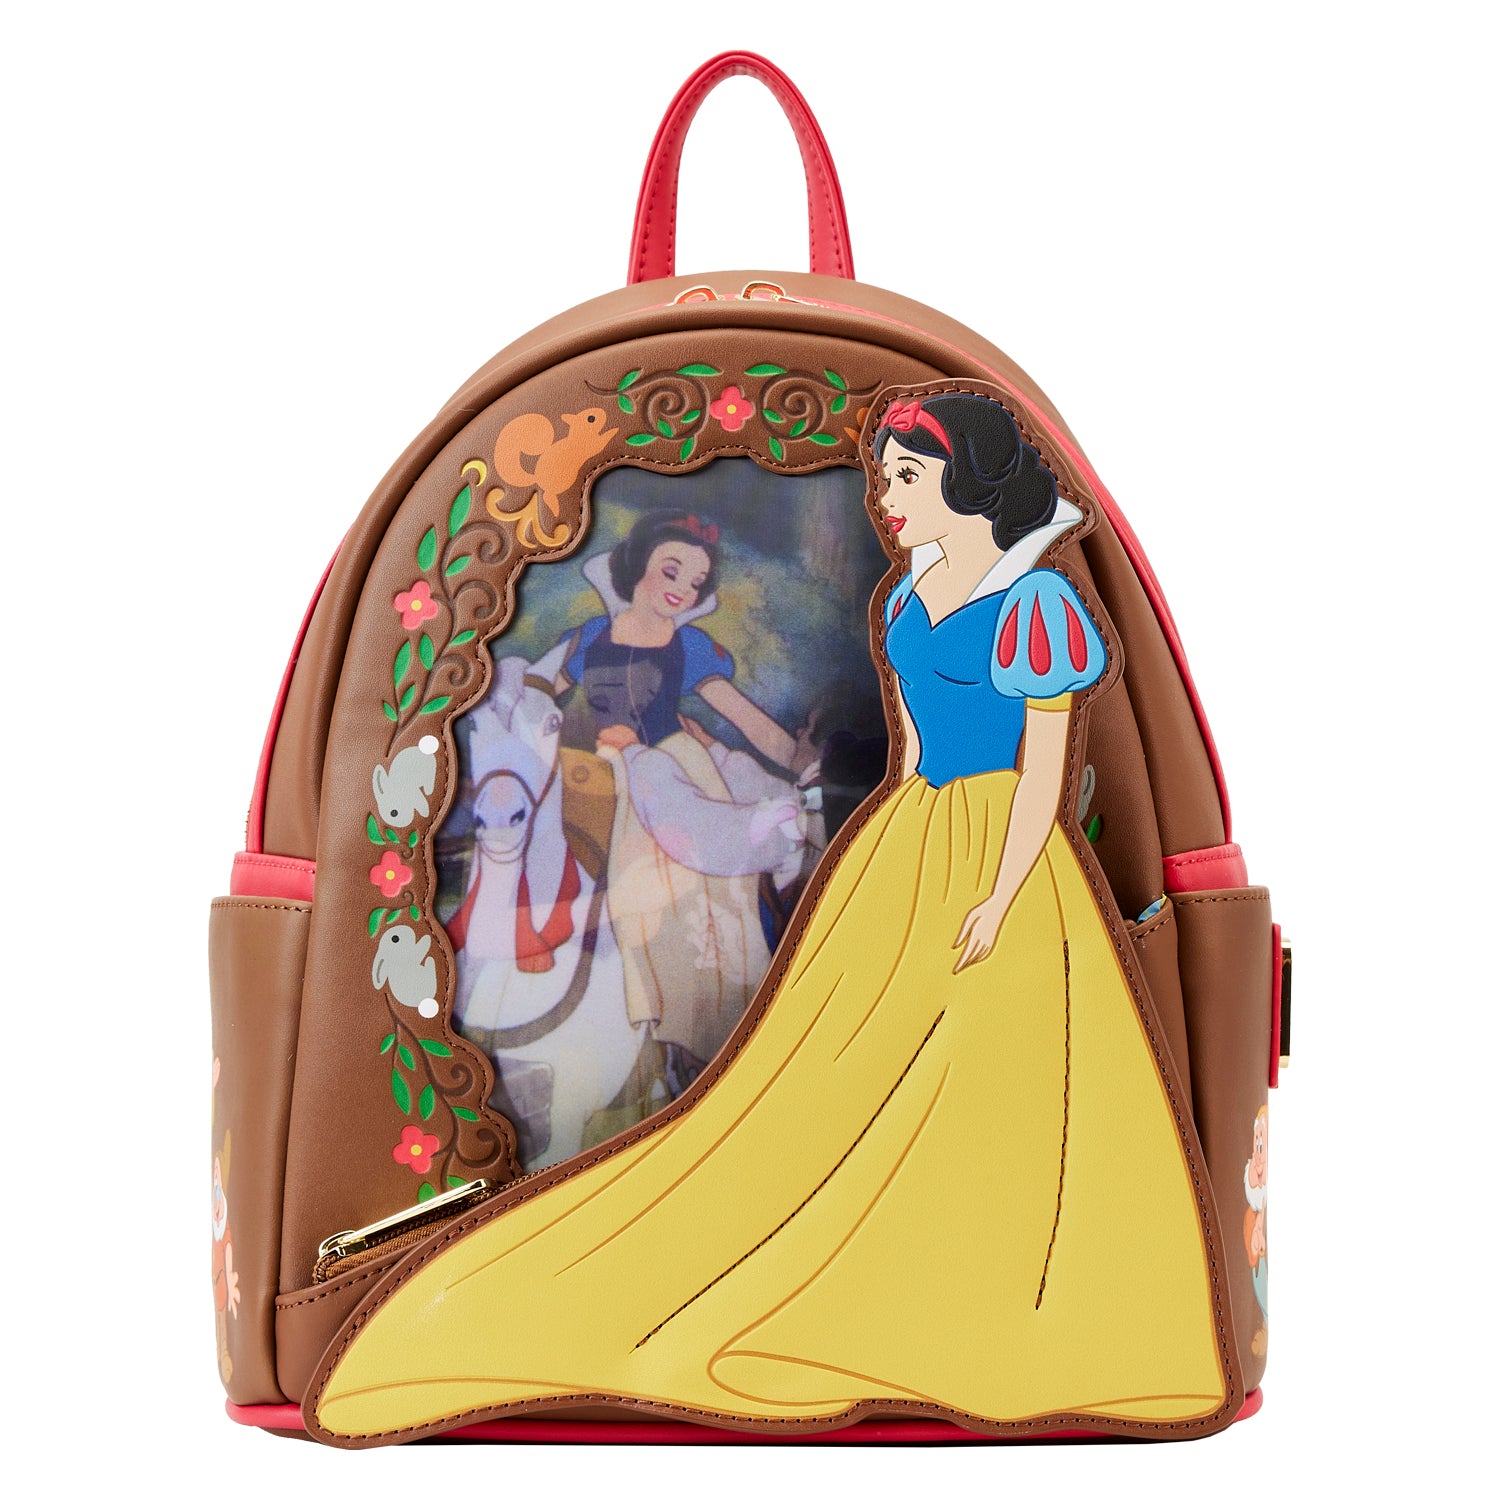 Sleeping Beauty Lenticular Mini-Backpack - Entertainment Earth